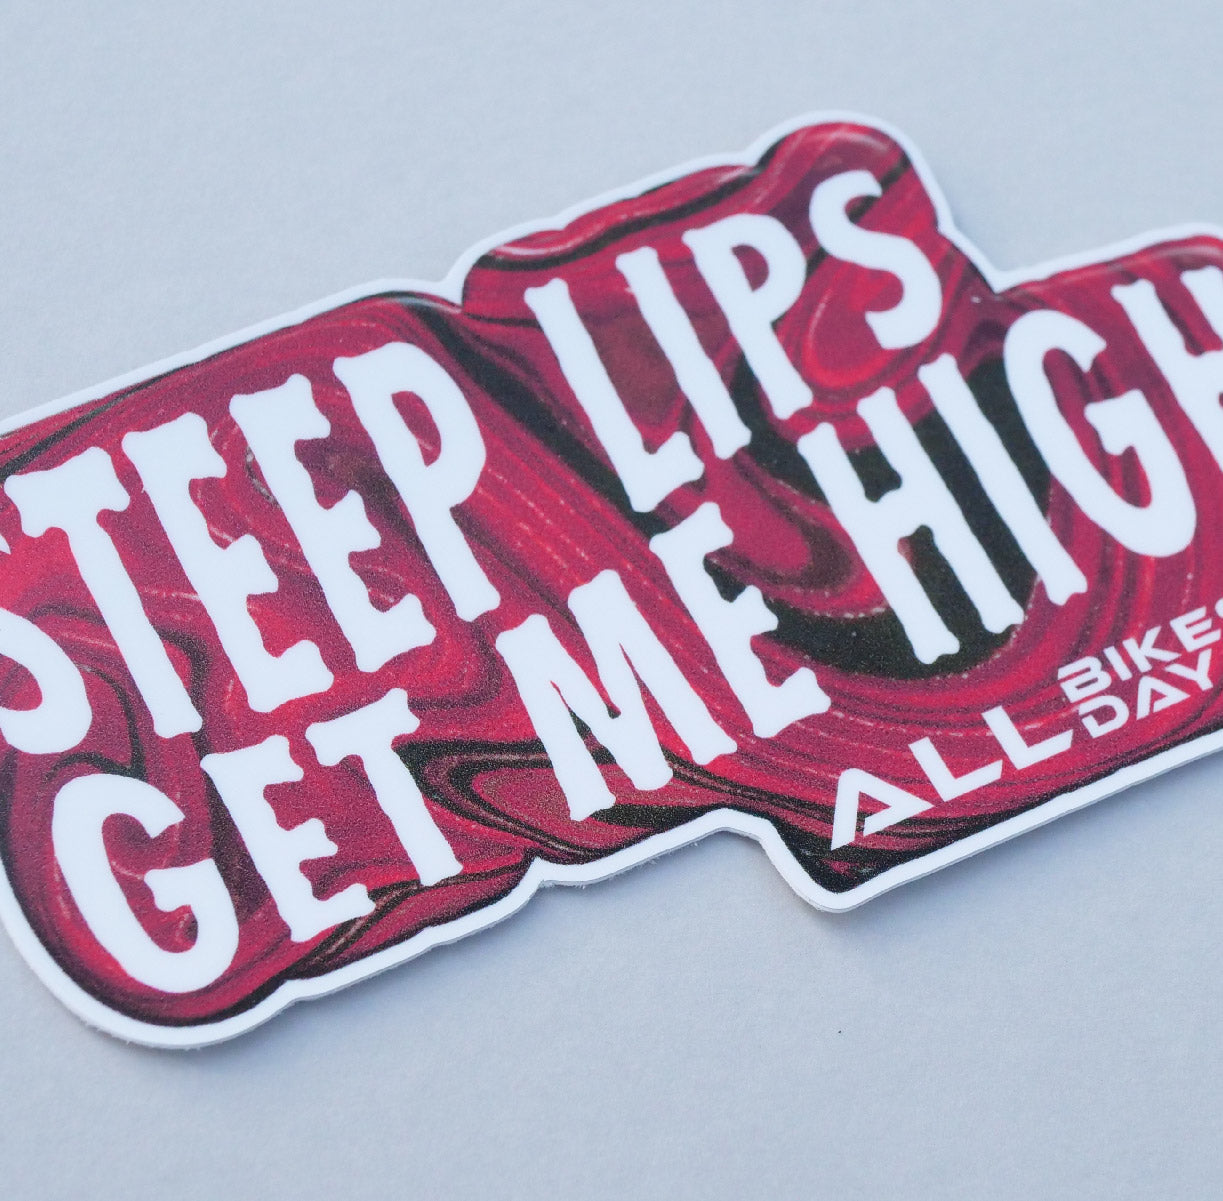 Steep Lips Get Me High Sticker